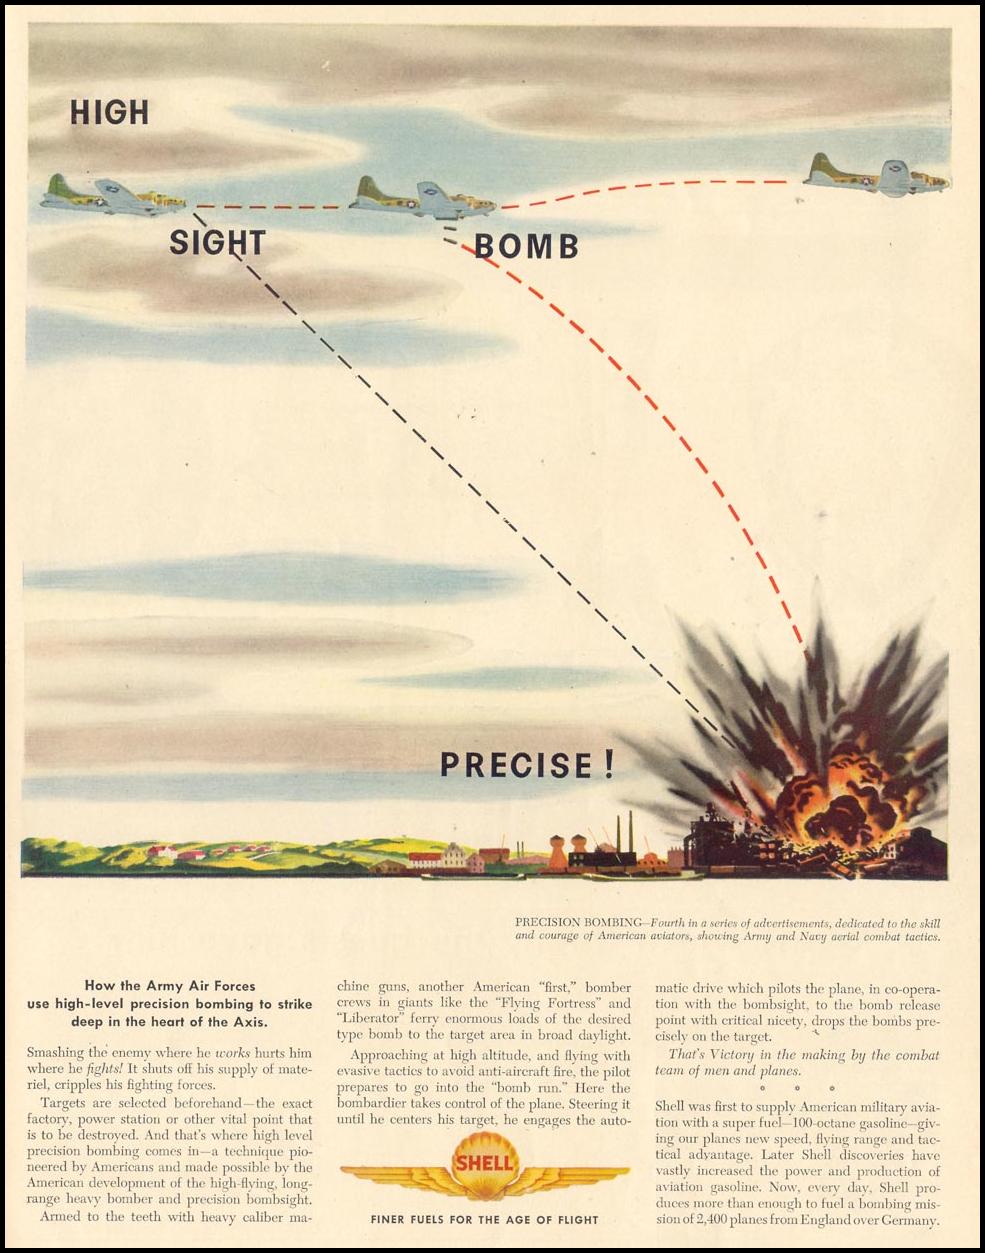 SHELL WAR PRODUCTION
LIFE
02/21/1944